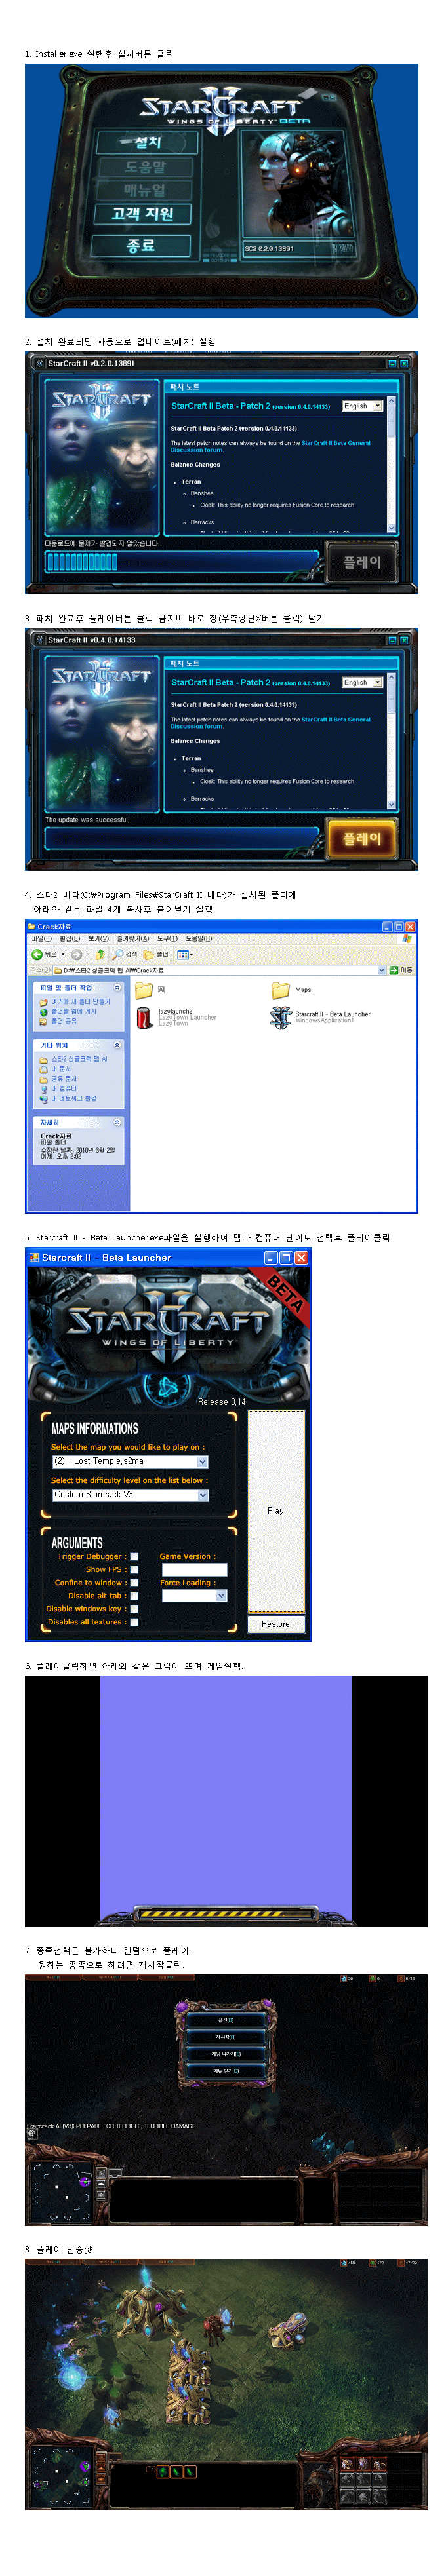 starcraft2 Install.gif